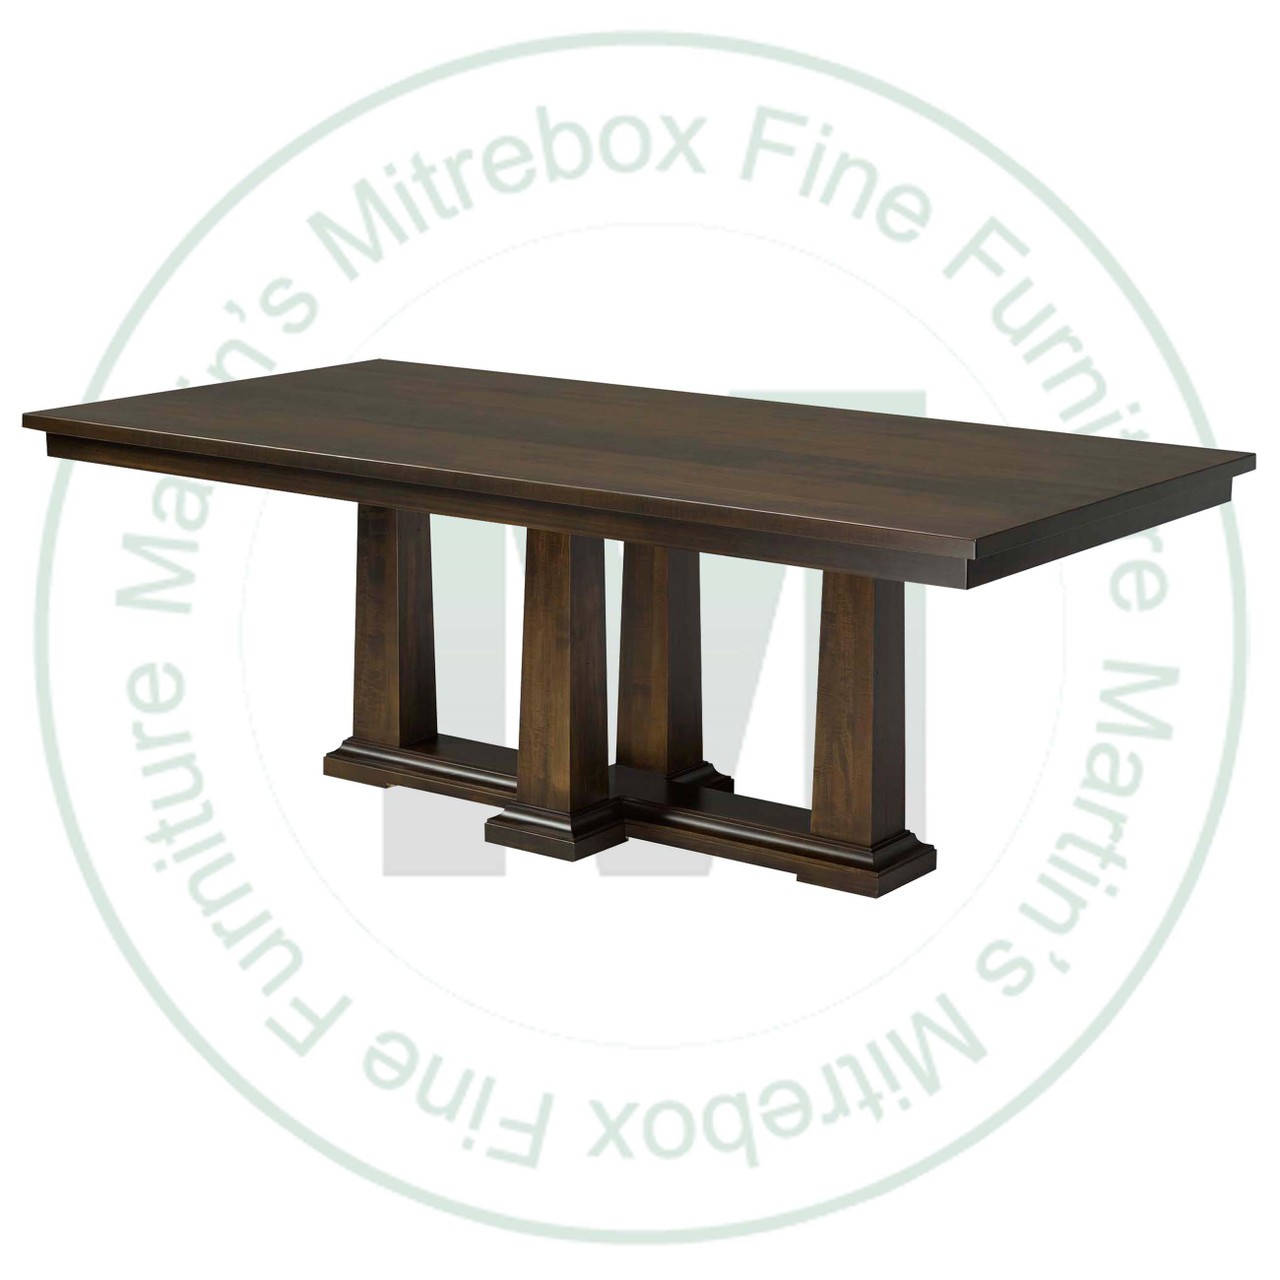 Oak Parthenon Double Pedestal Table 48''D x 108''W x 30''H Solid Top Table Has 1.75'' Thick Top